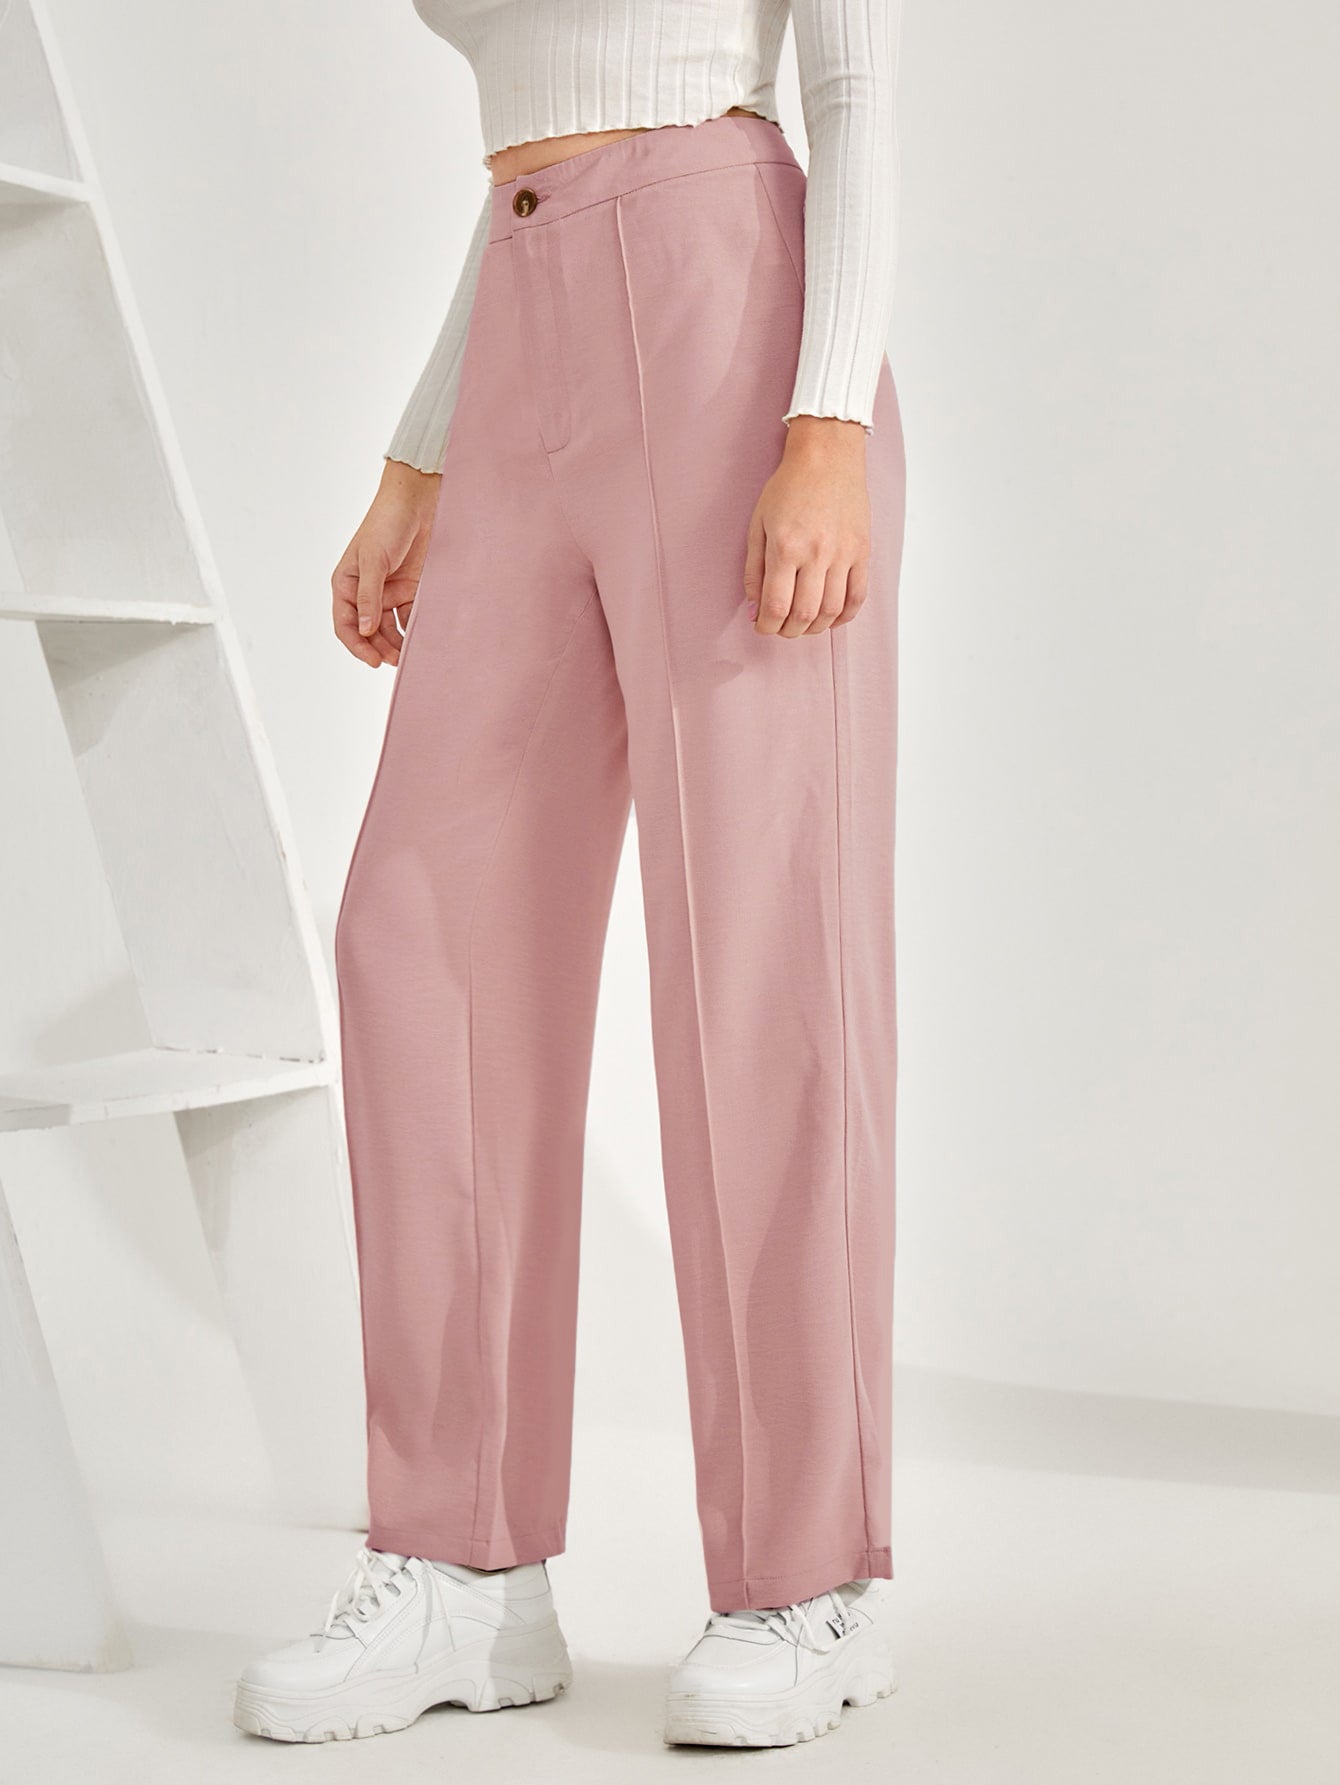 ASOS DESIGN tapered suit trousers in peach | ASOS